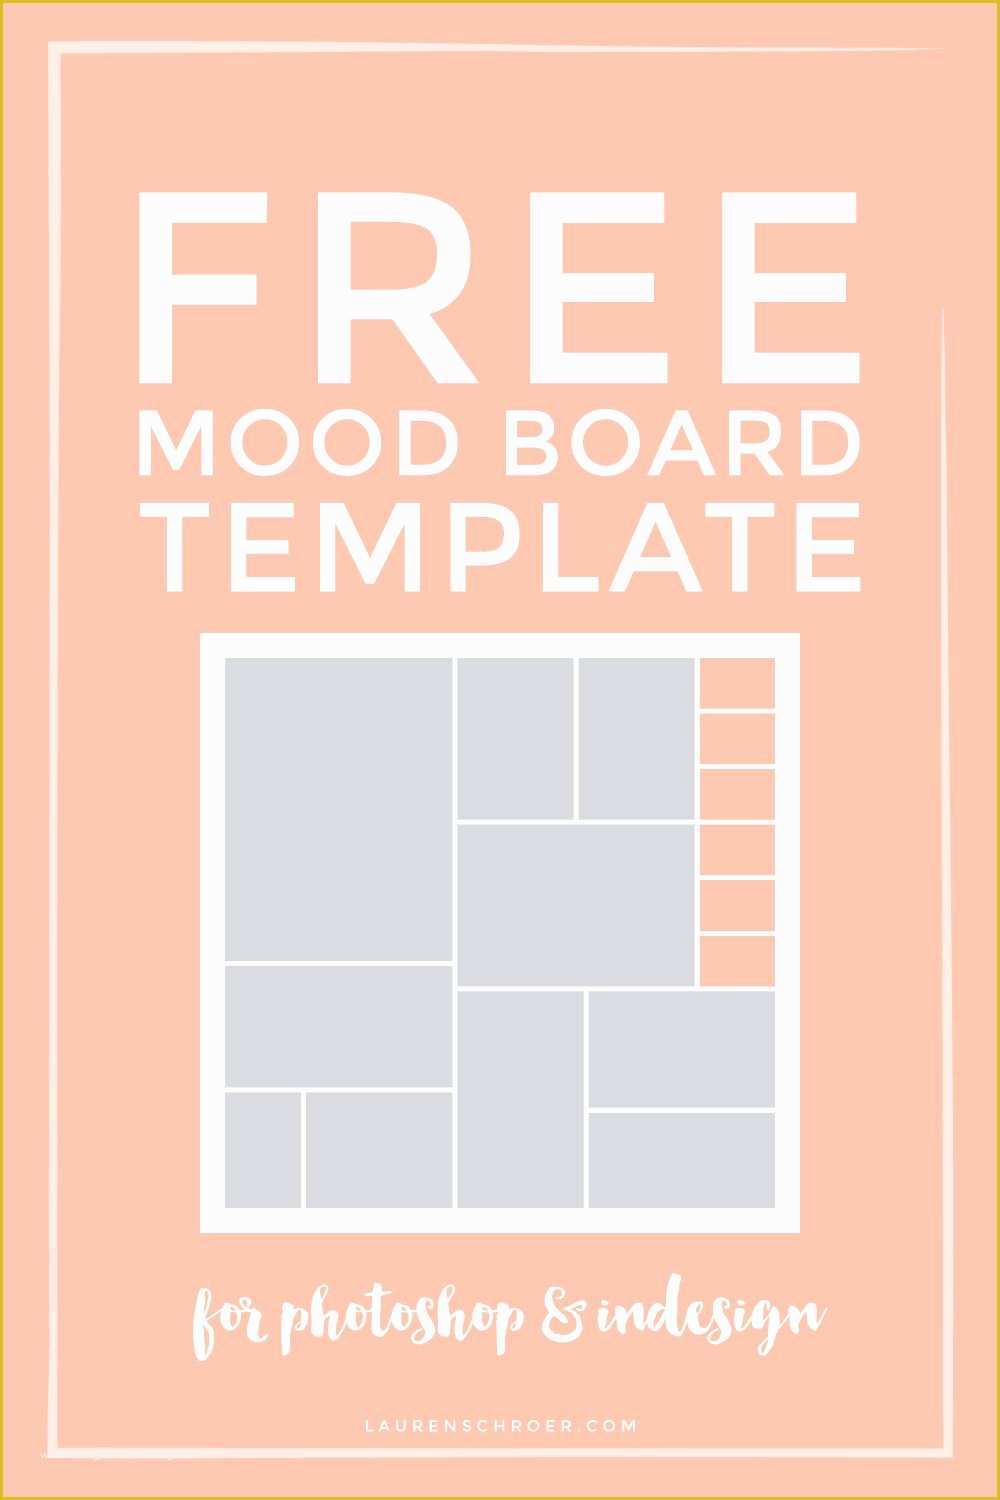 mood board template illustrator download